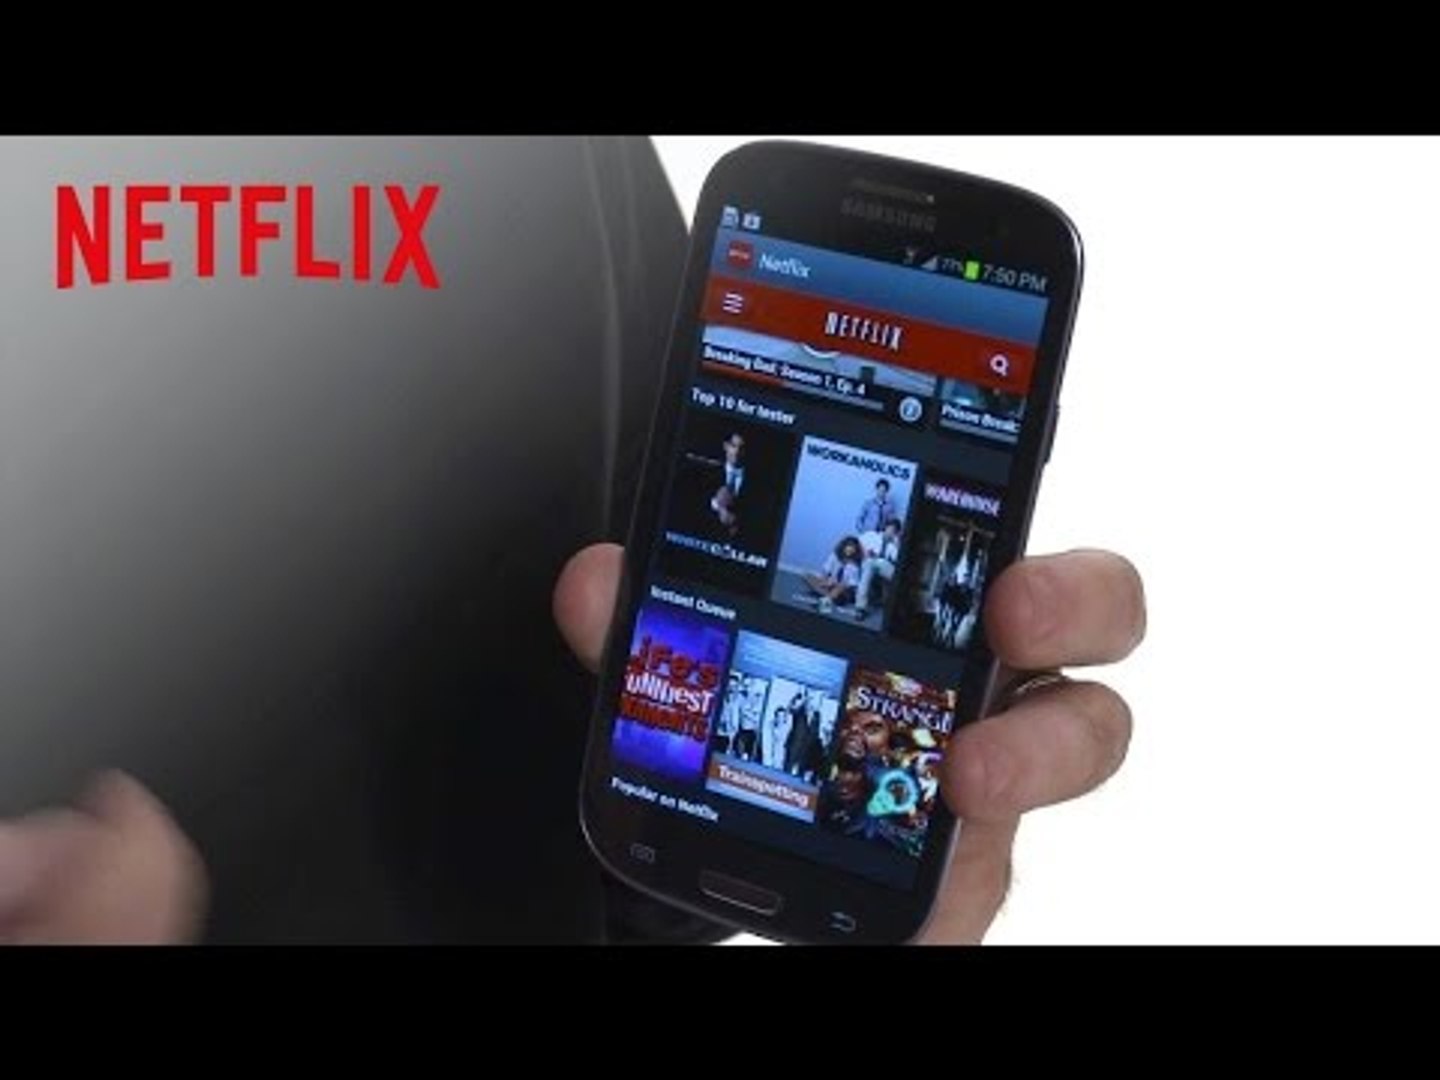 New Netflix Experience on Android | Netflix